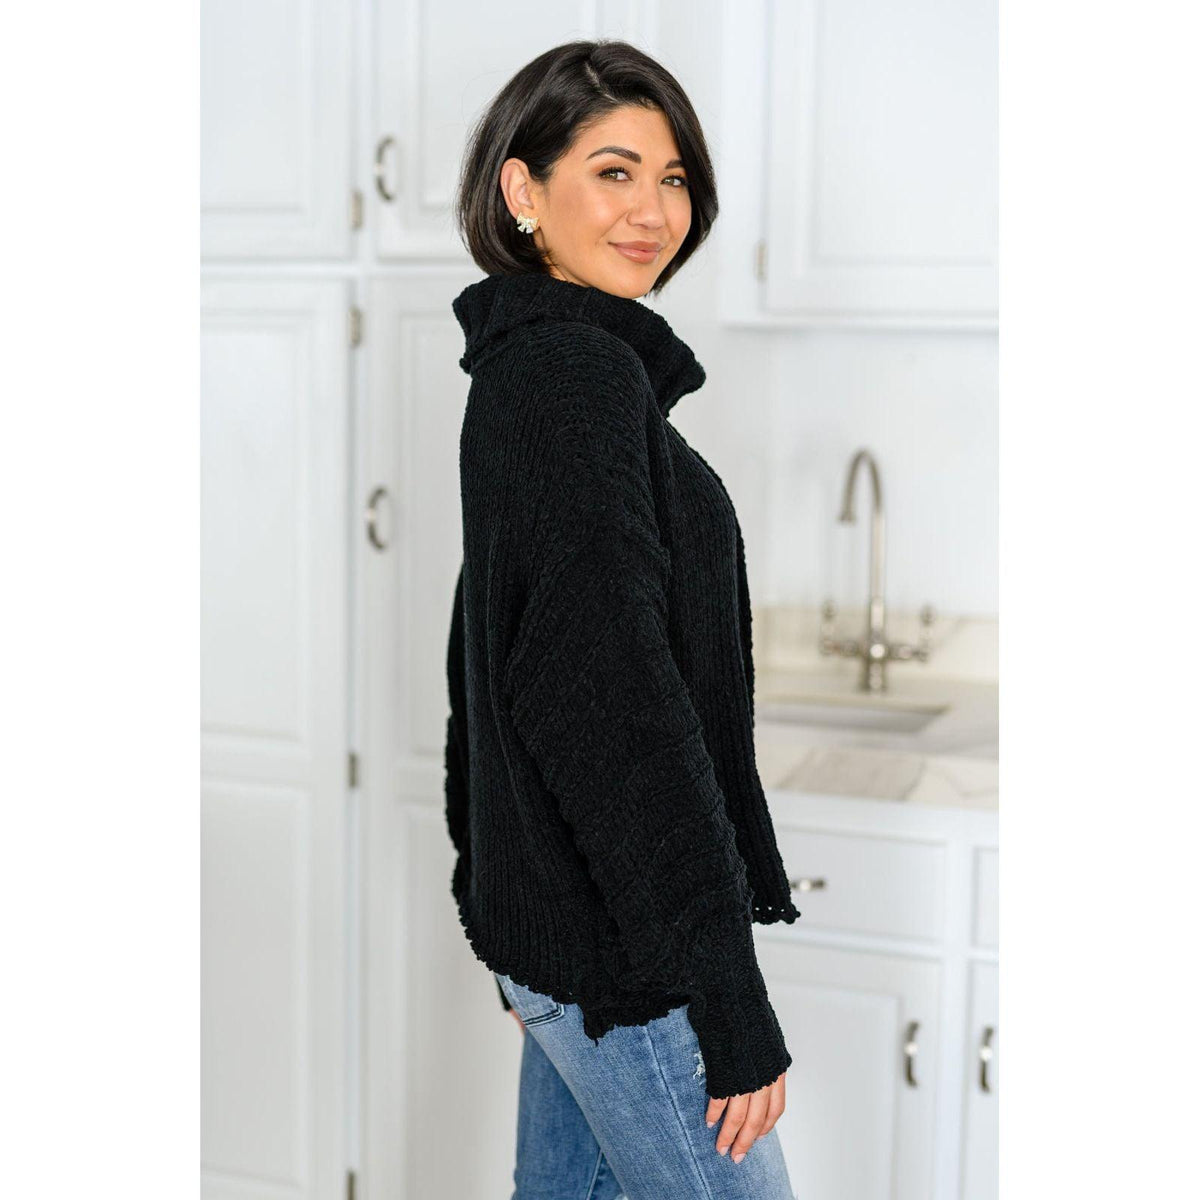 Maureen Long Sleeve Solid Knit Sweater - becauseofadi